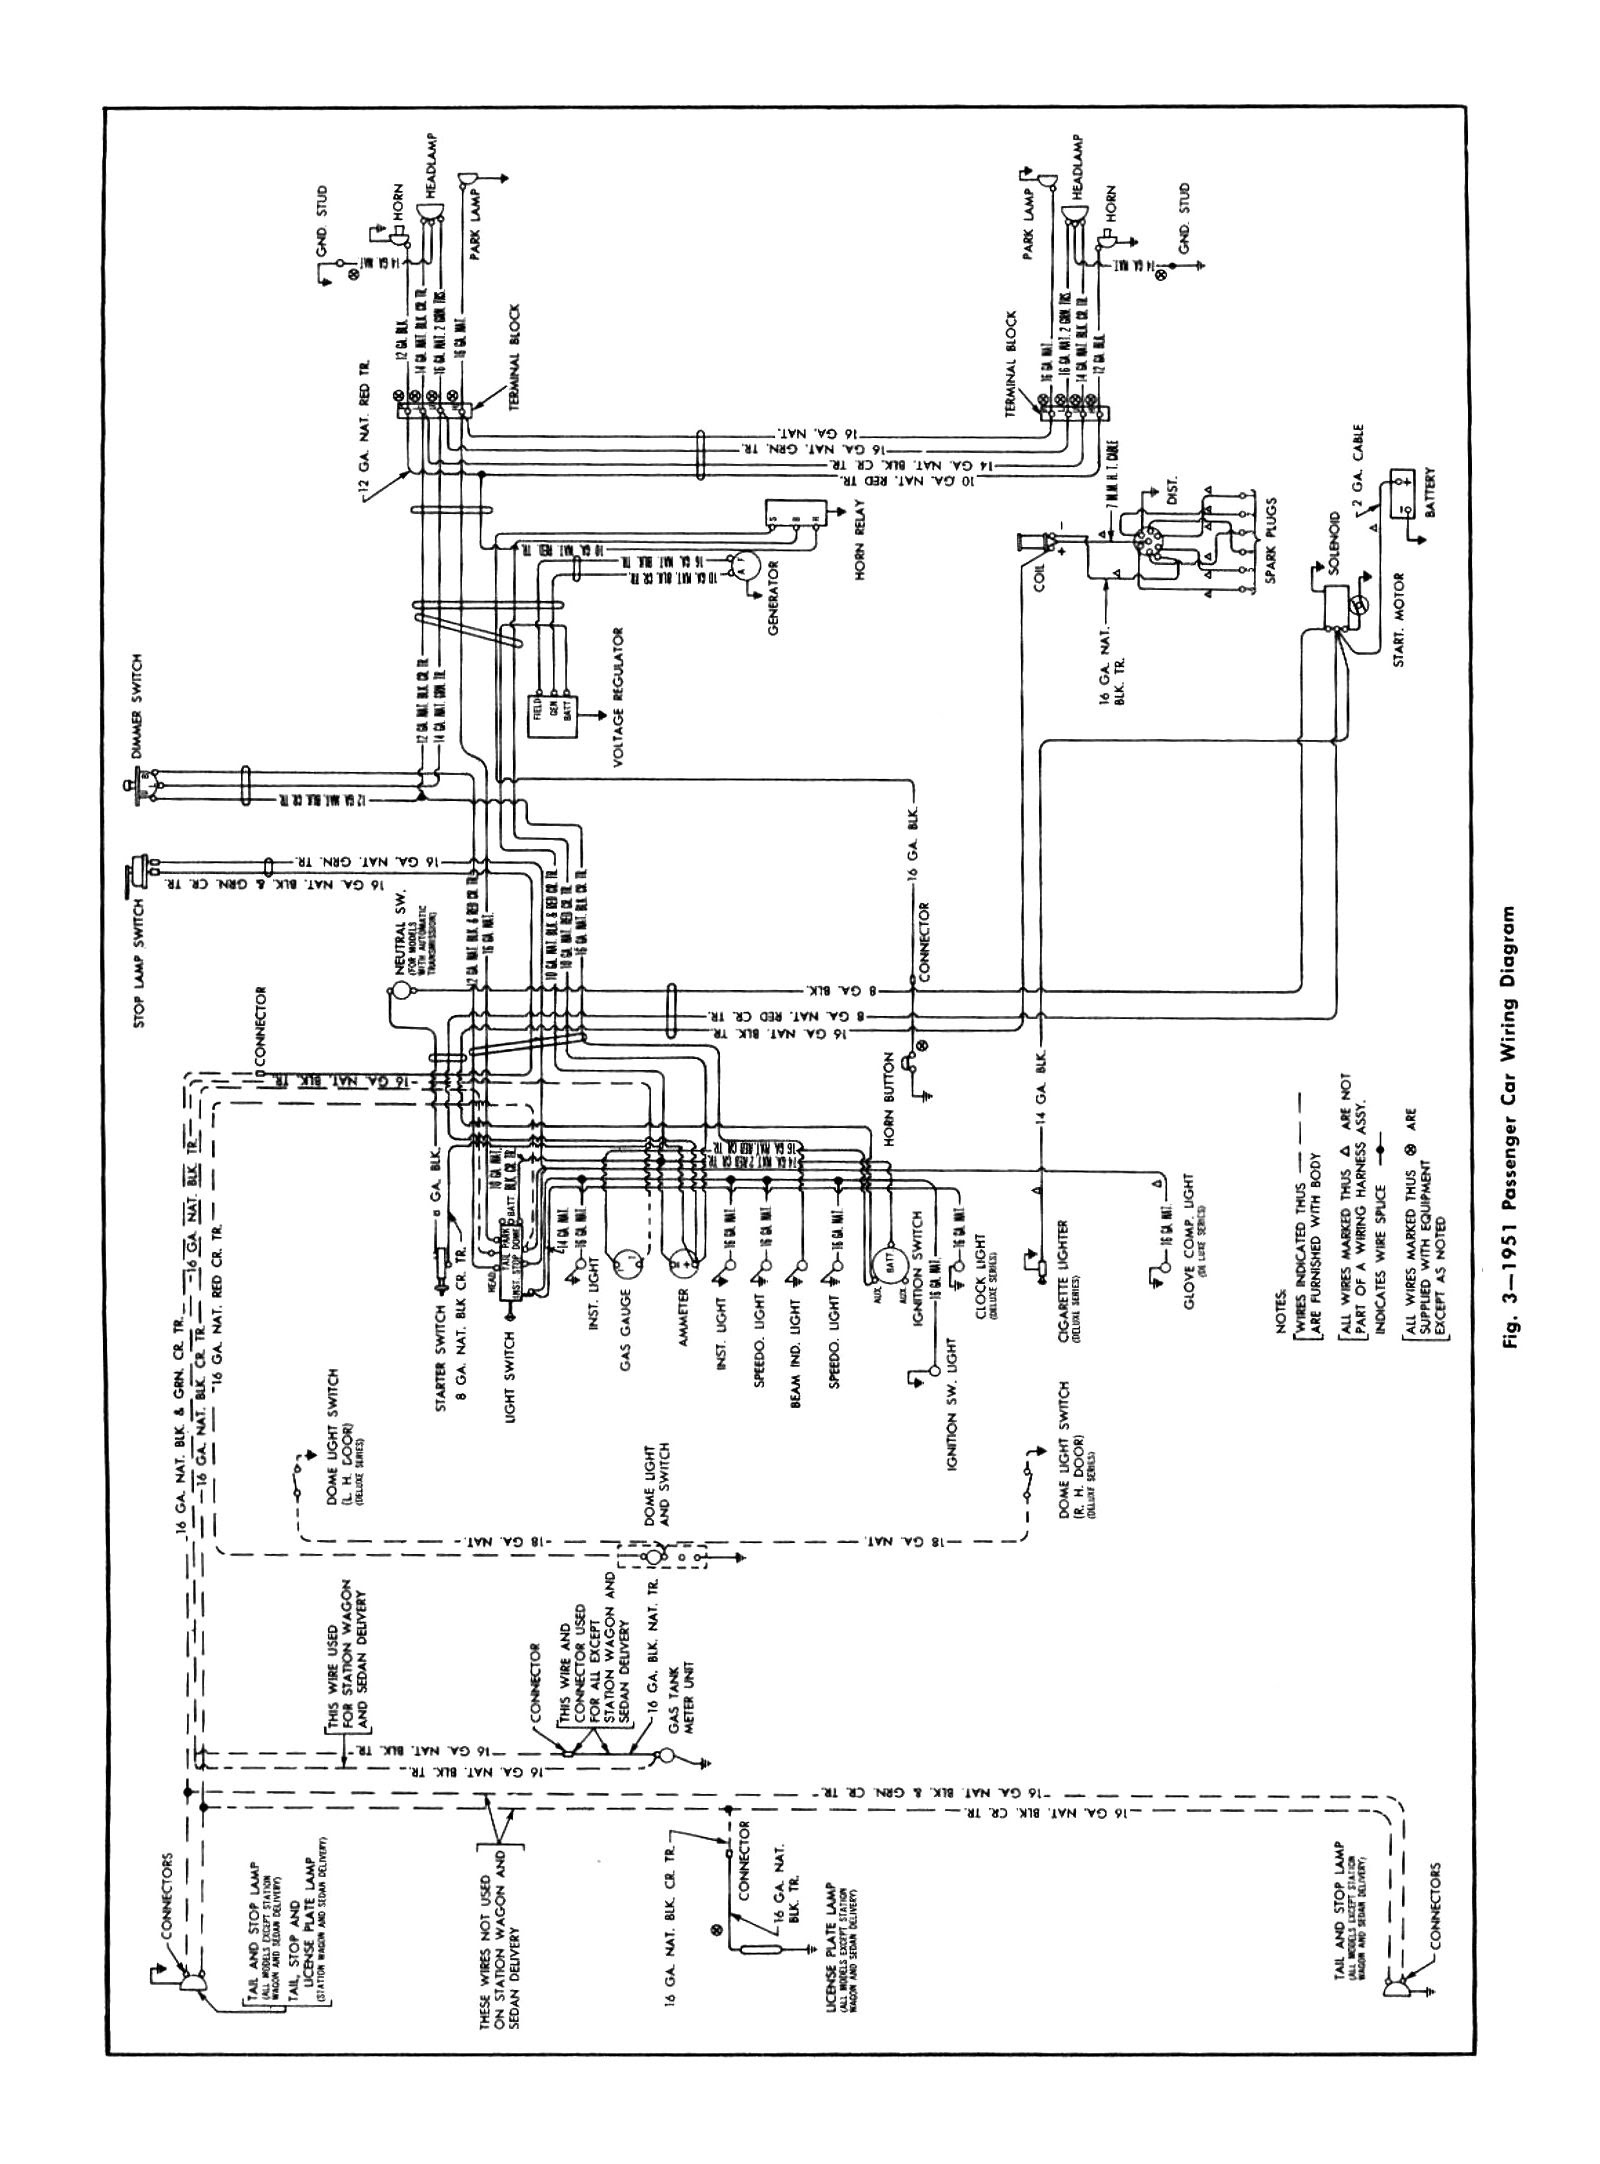 51 Chevy Wiring Diagram